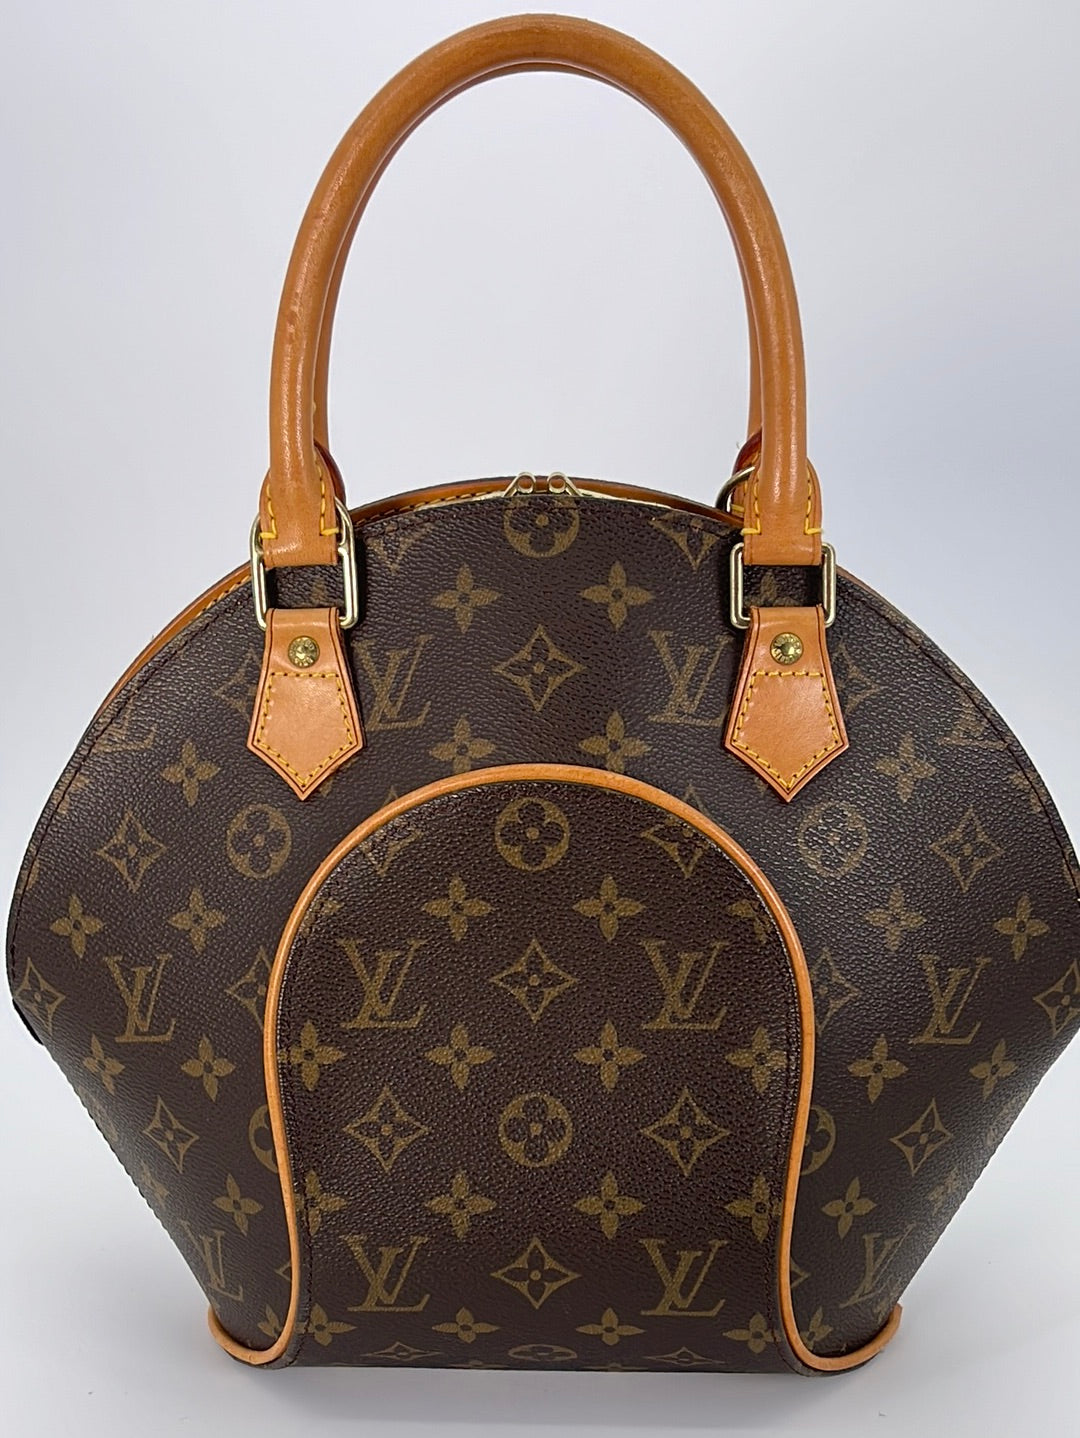 Louis Vuitton Ellipse Pm Handbag Price